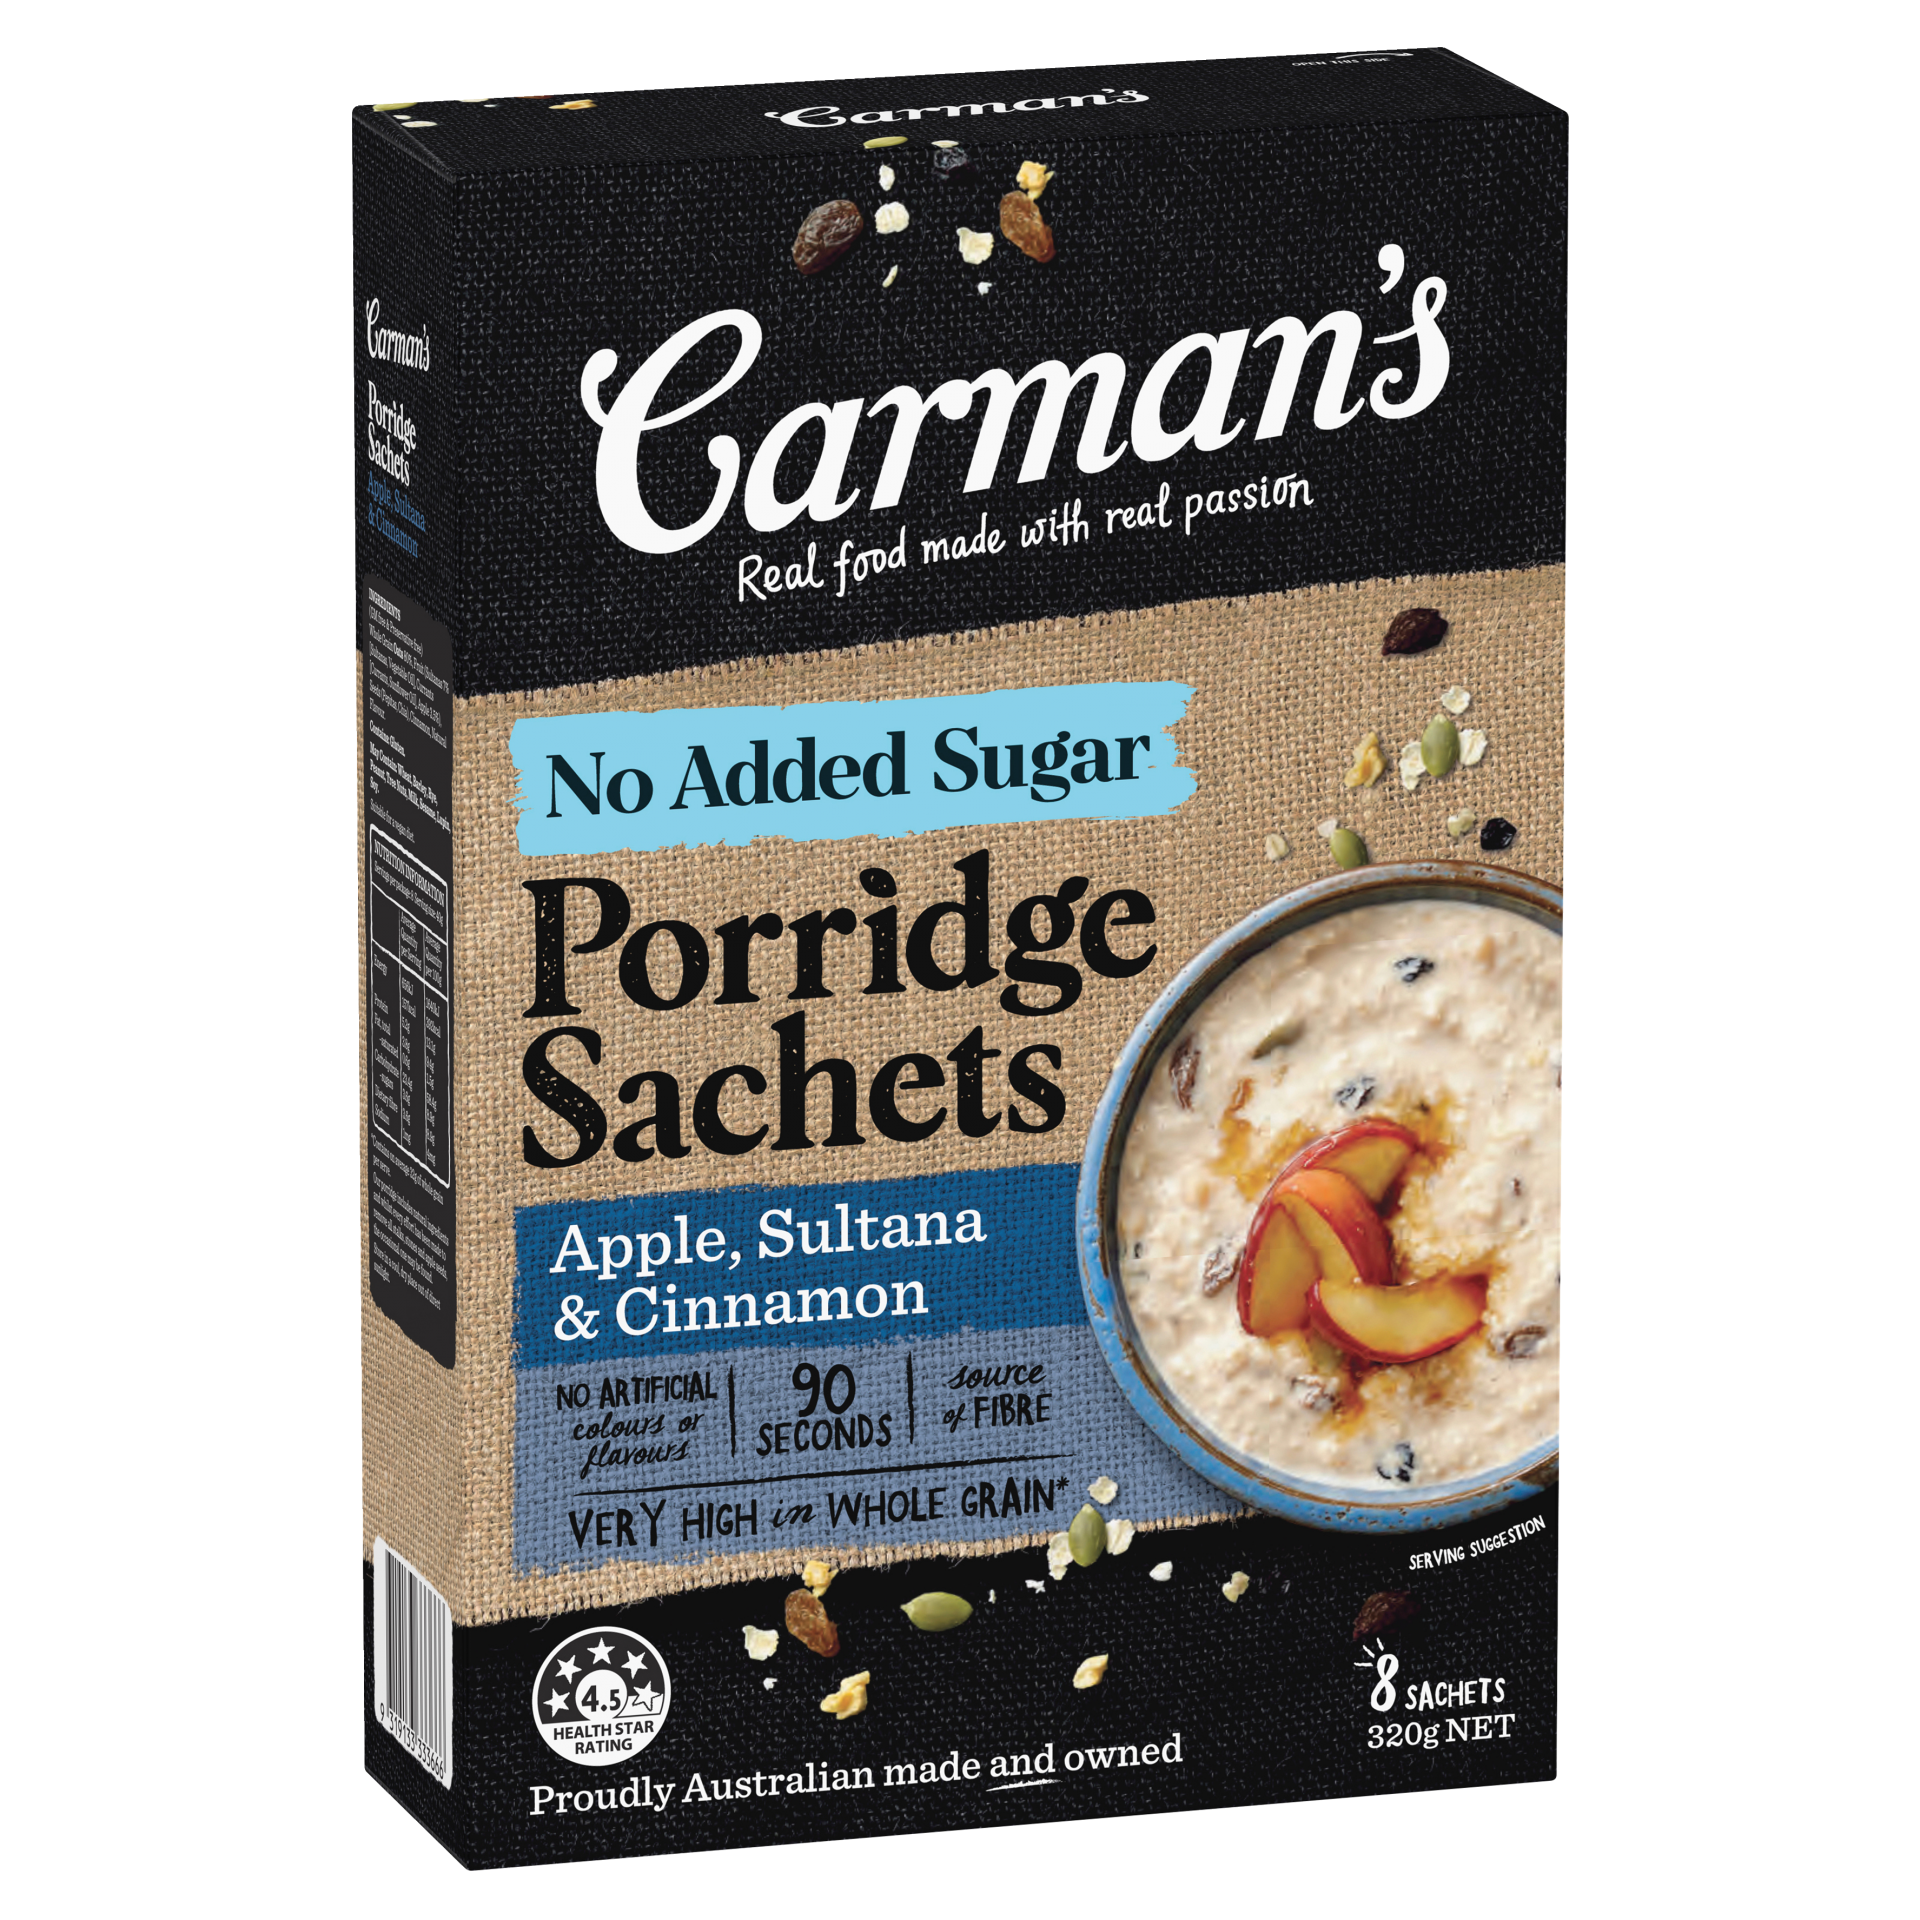 Apple, Sultana & Cinnamon Porridge Sachets